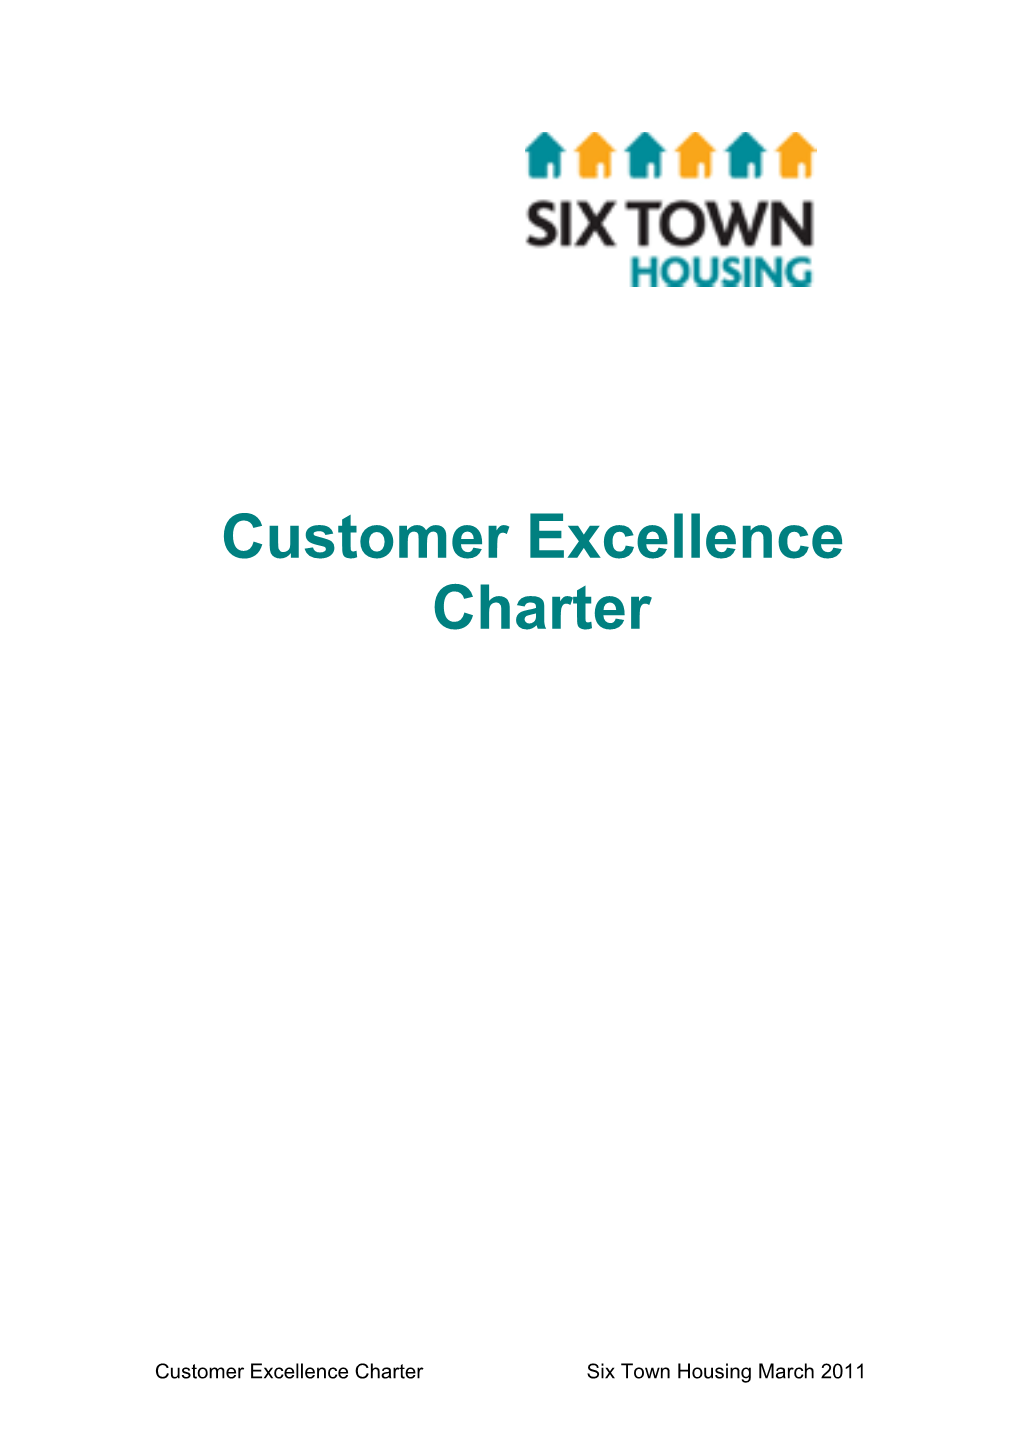 Customer Care Charter